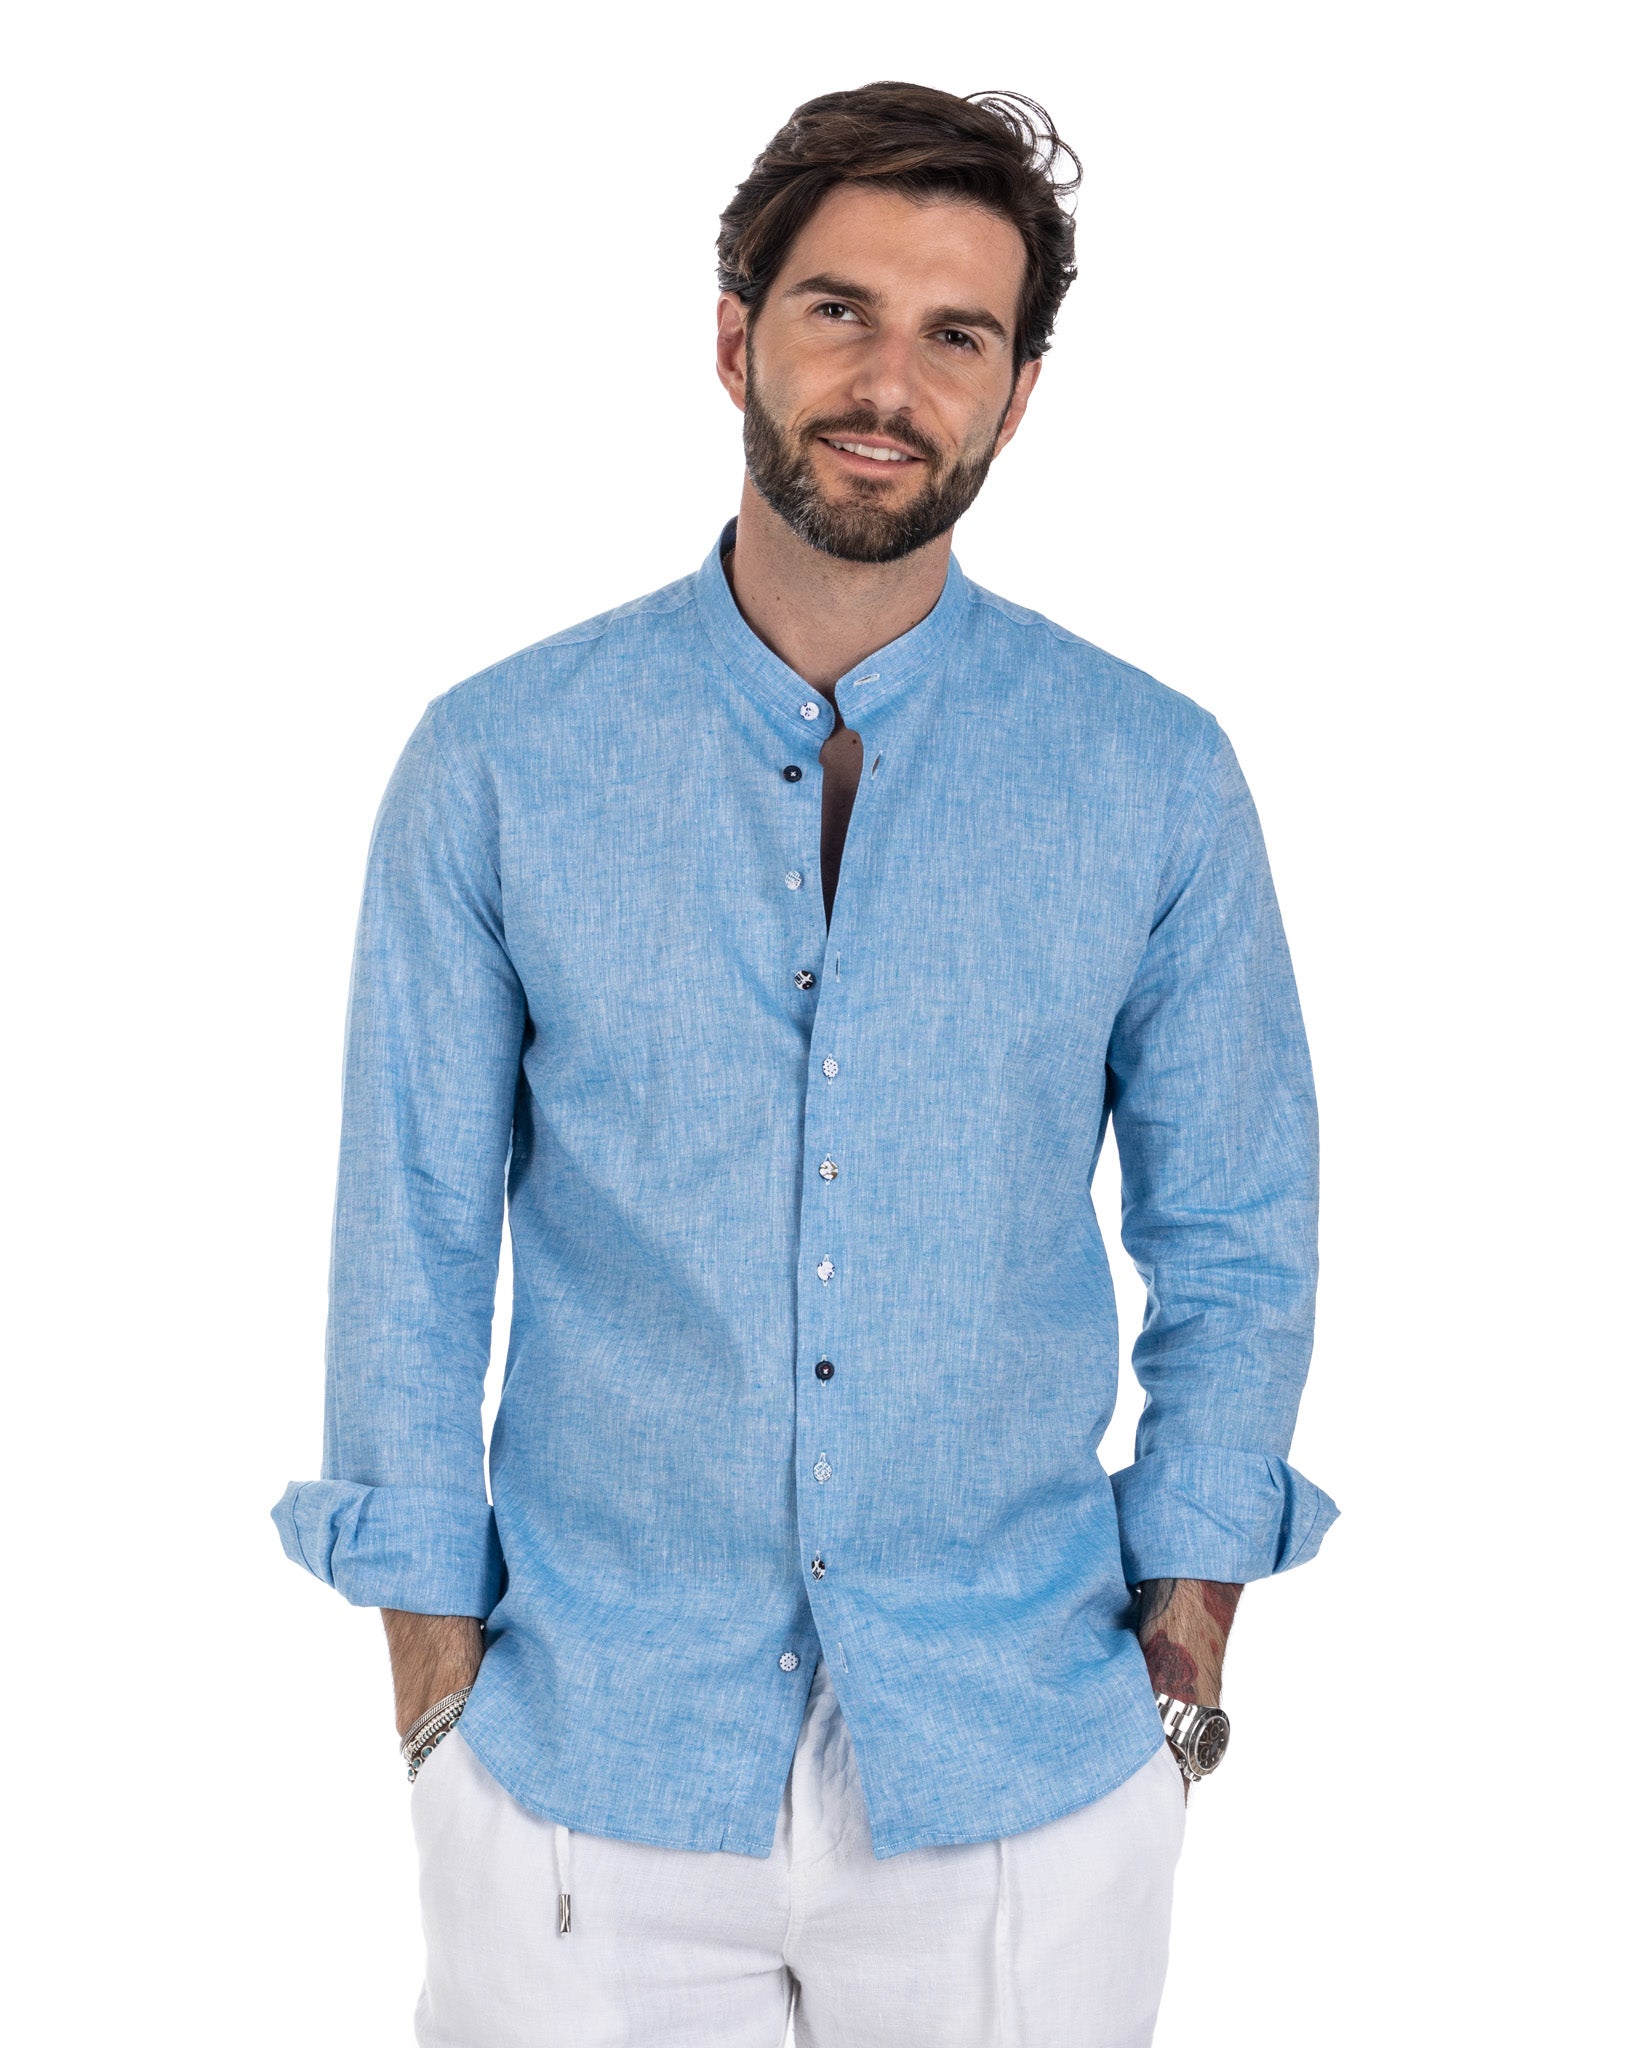 Positano - turquoise linen Korean shirt